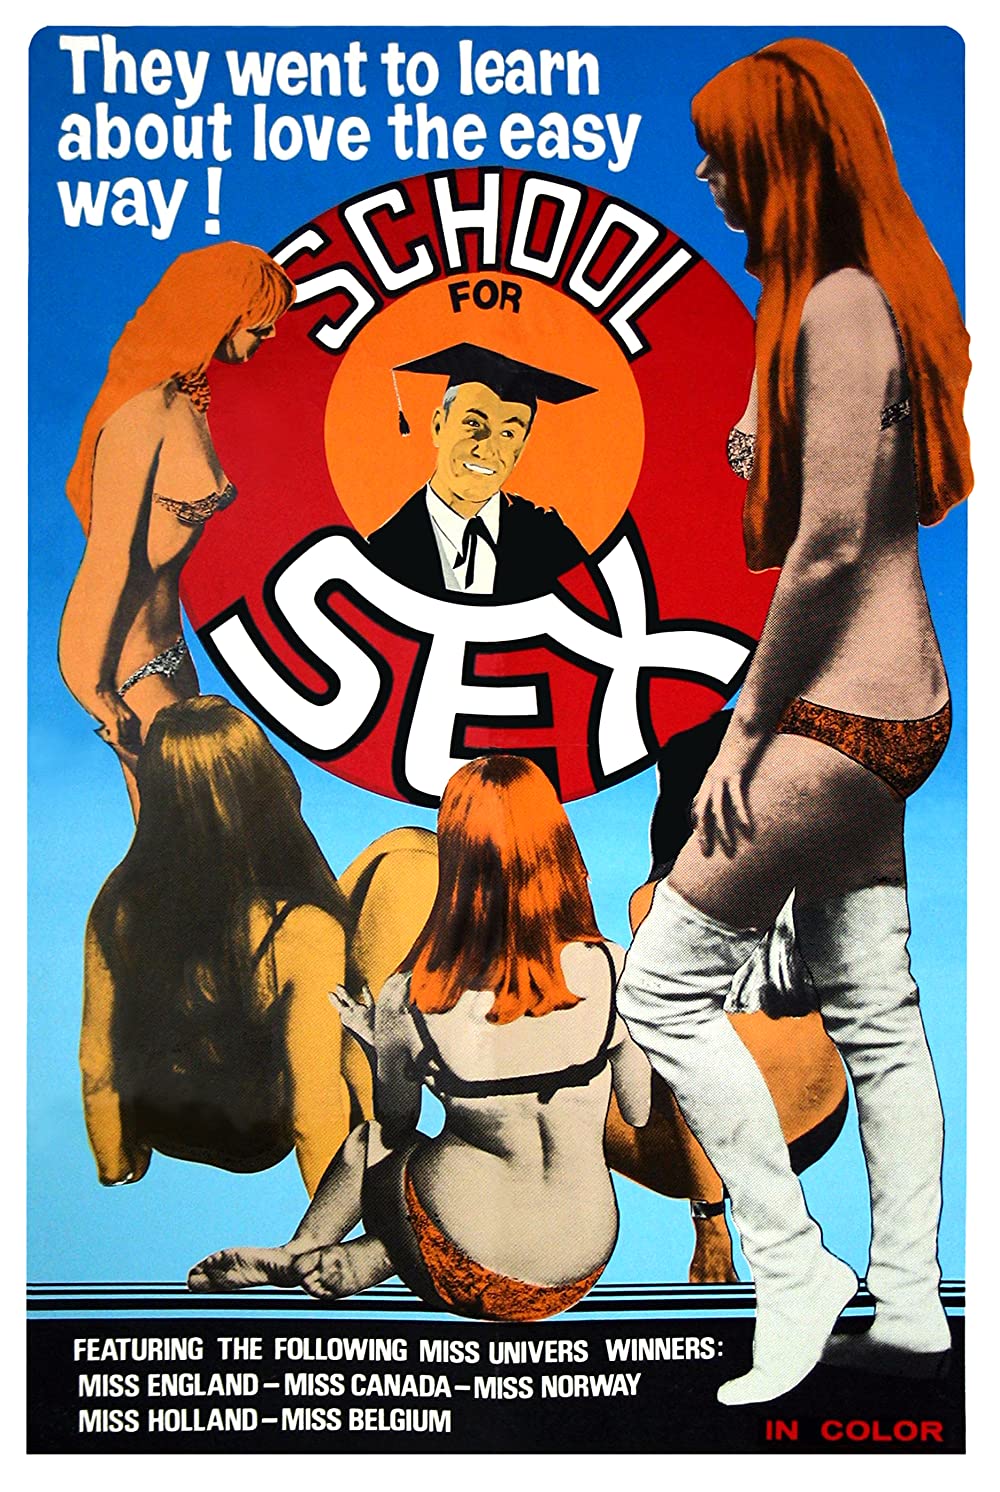 School For Sex - School For Love 1969